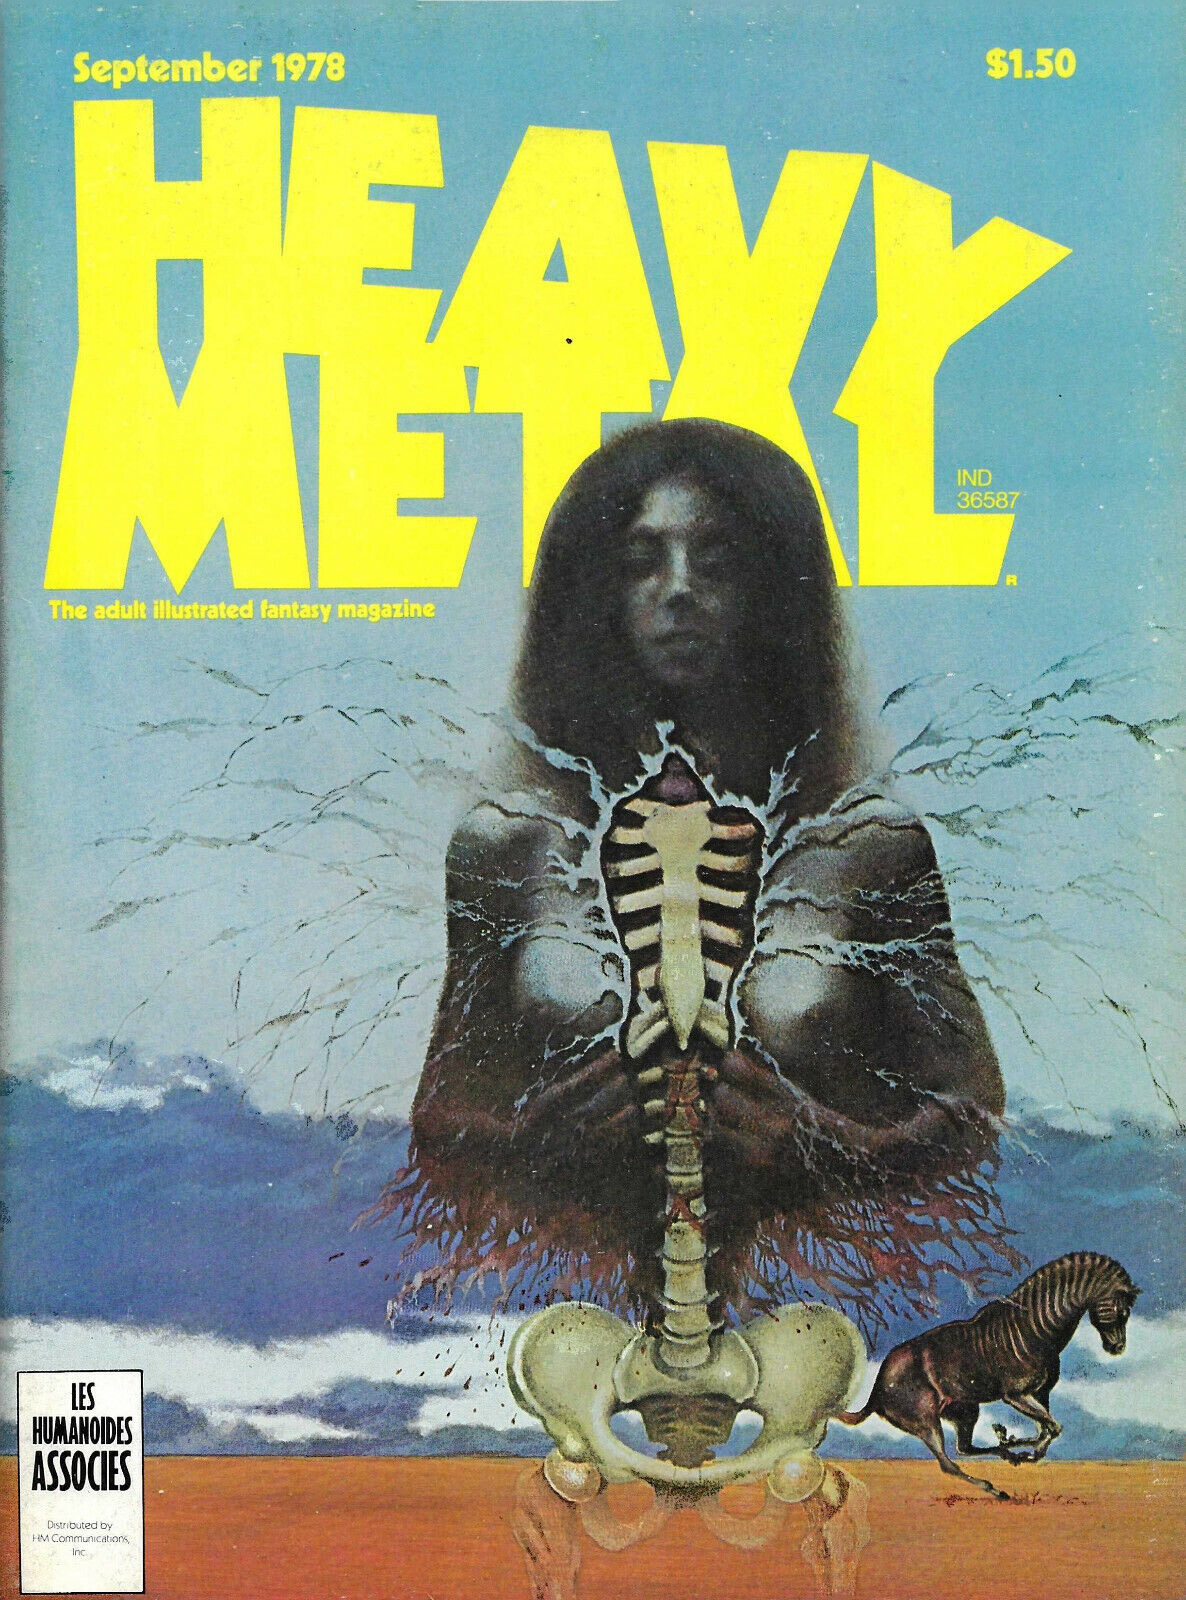 Heavy Metal, vol. 2 no5, cover, art by Jim Burns